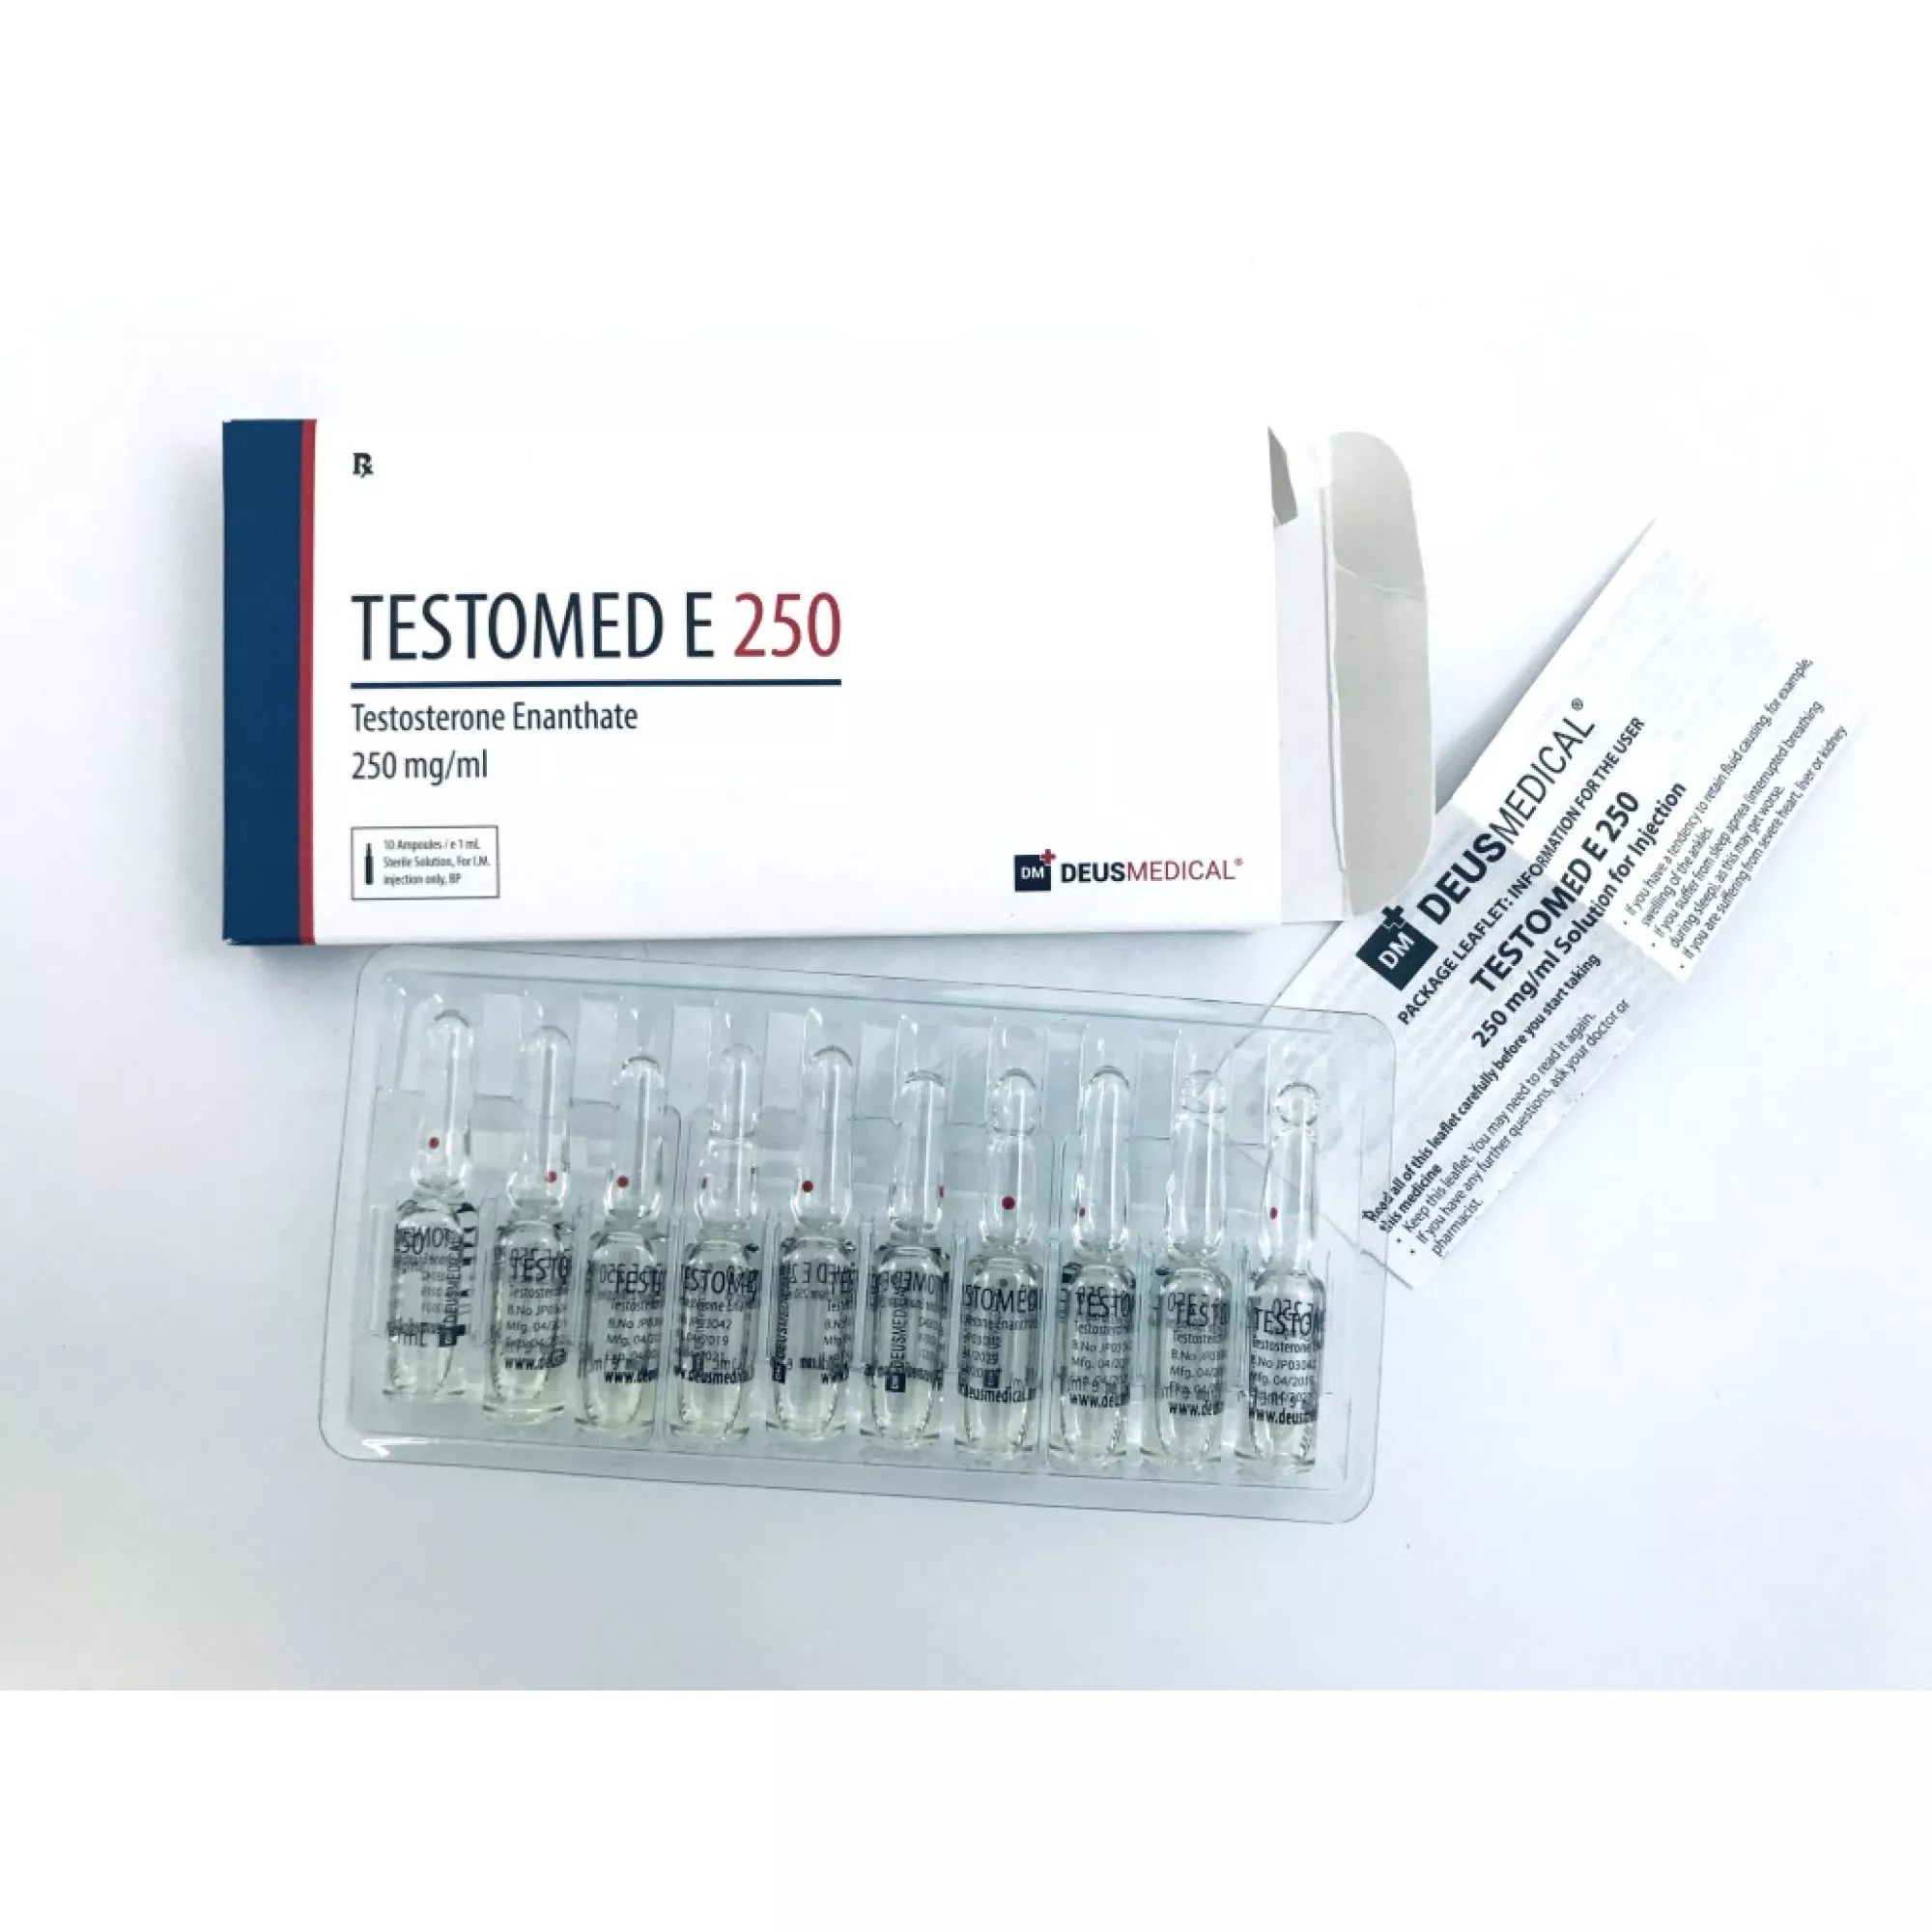 TESTOMED E 250 (Testosterone Enanthate), Deus Medical, Köp steroider online - www.deuspower.shop